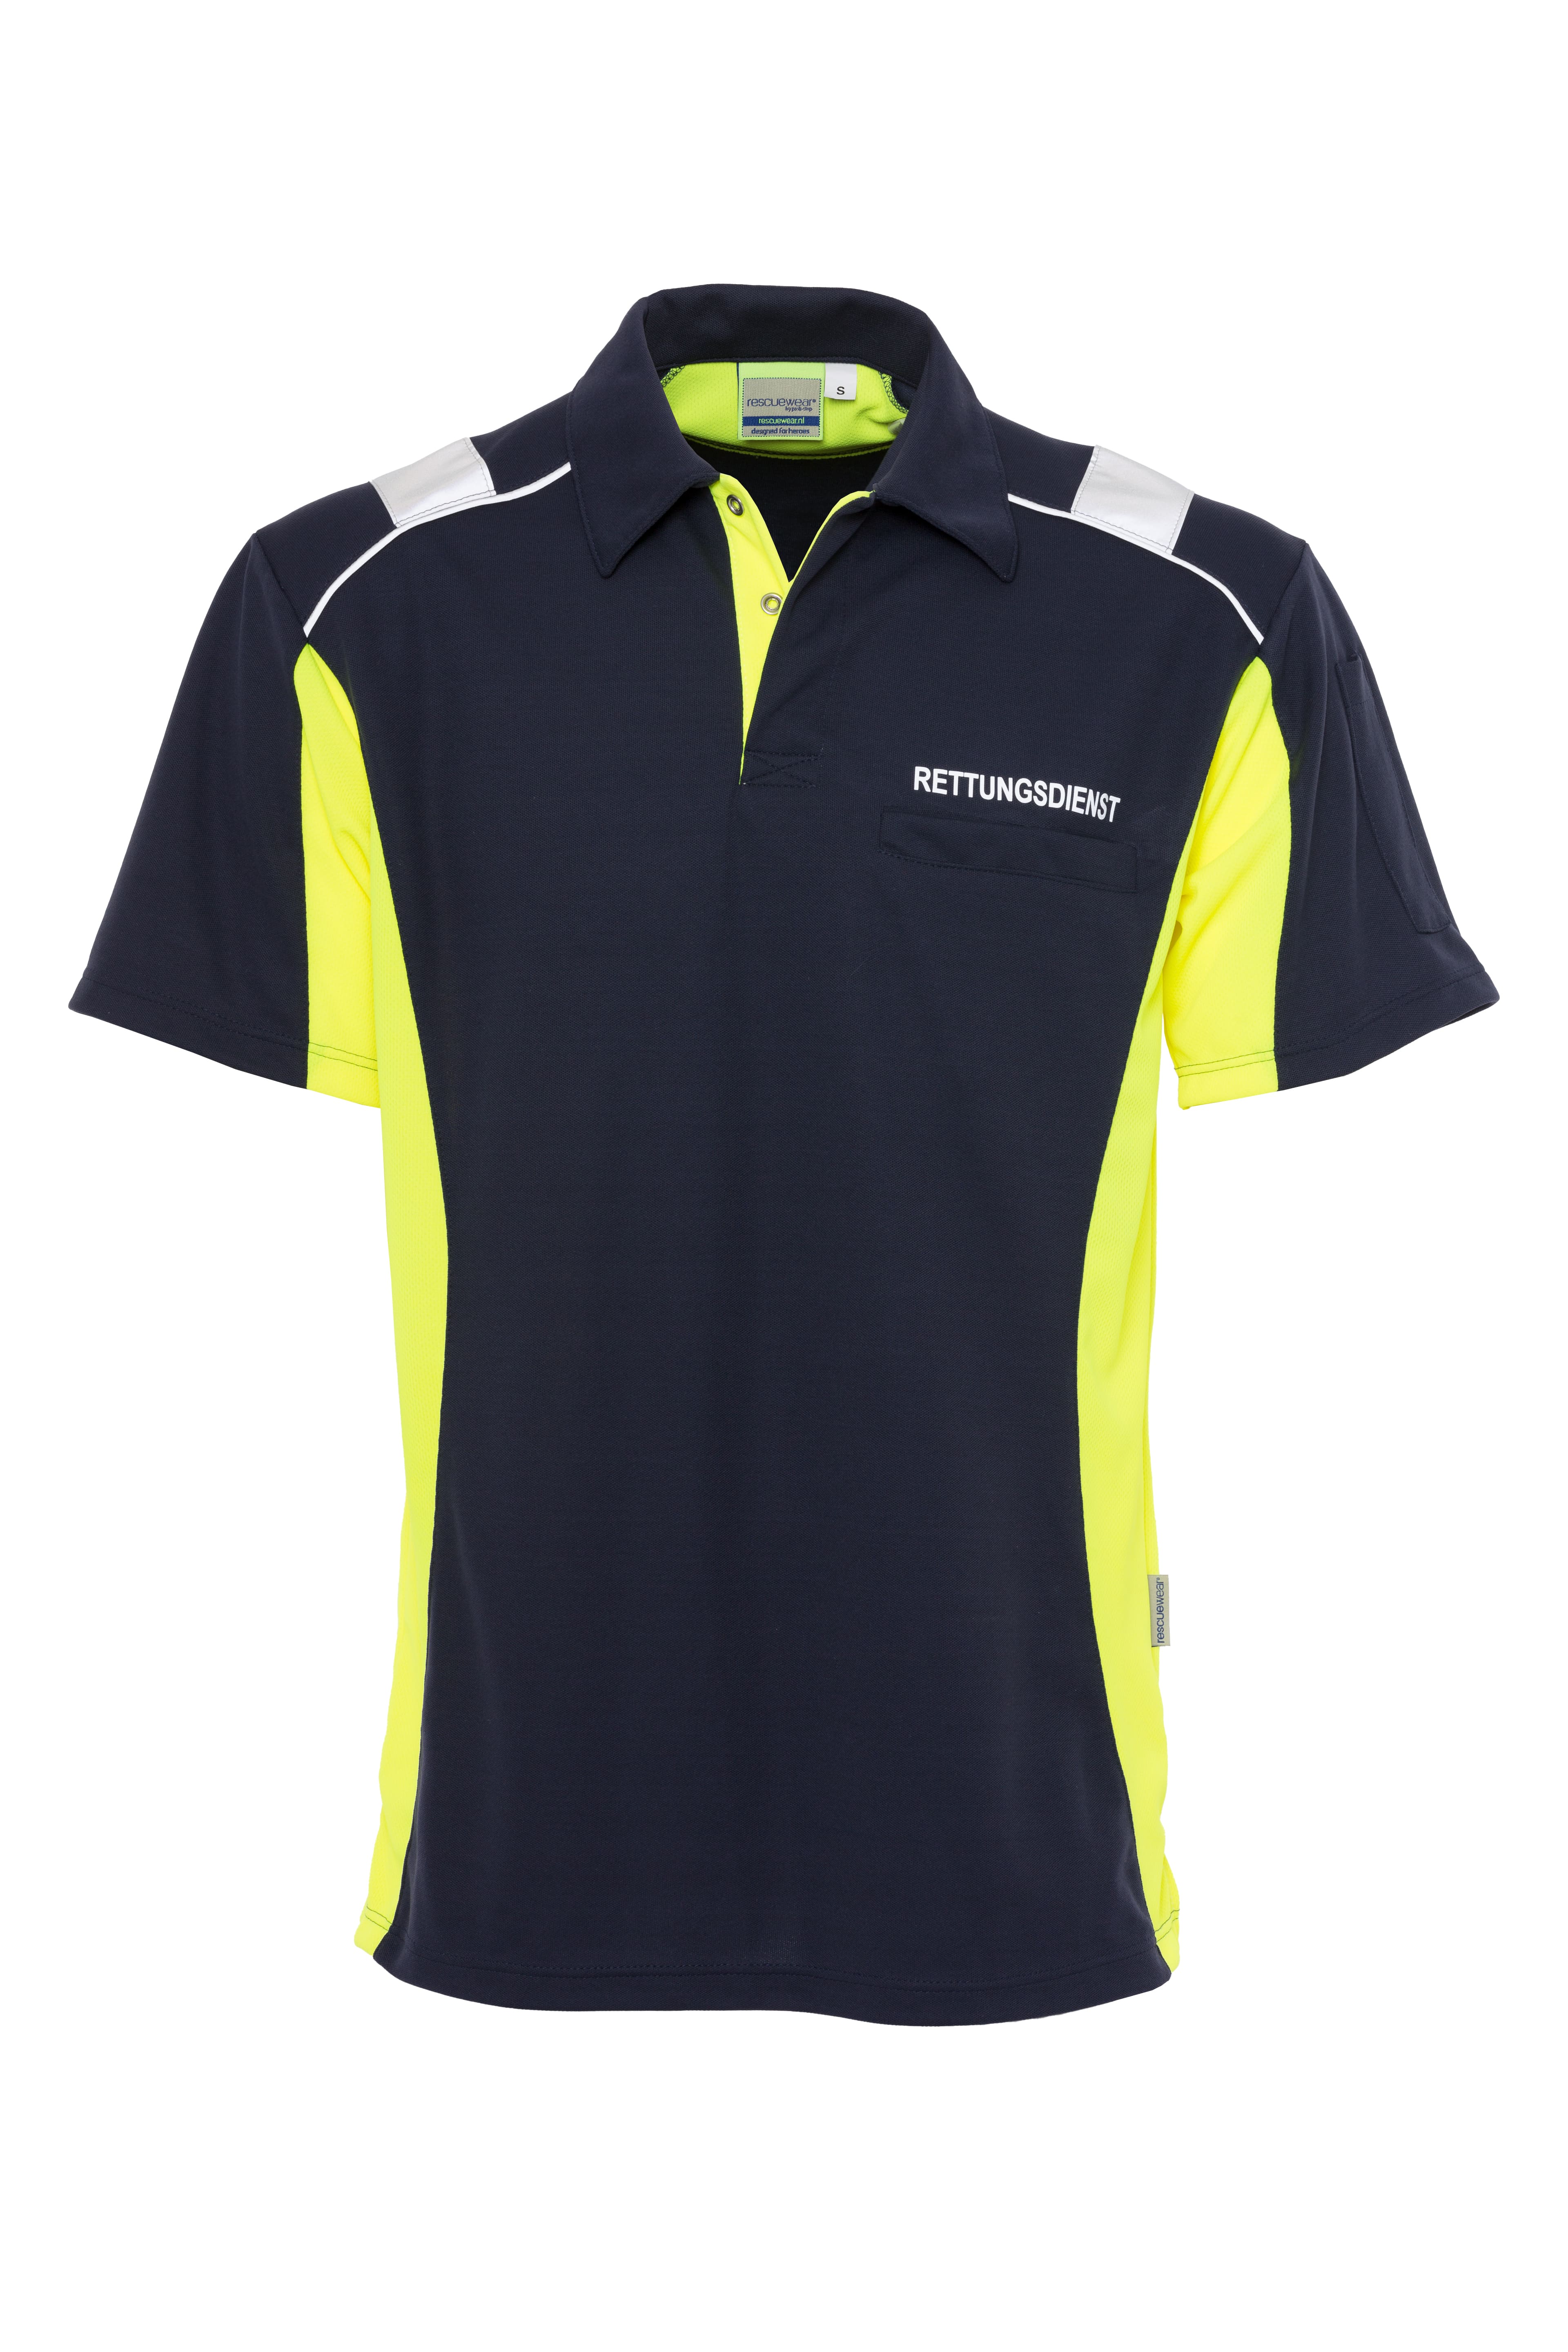 Rescuewear Poloshirt kurze Ärmel Dynamic Marineblau / Neon Gelb - S